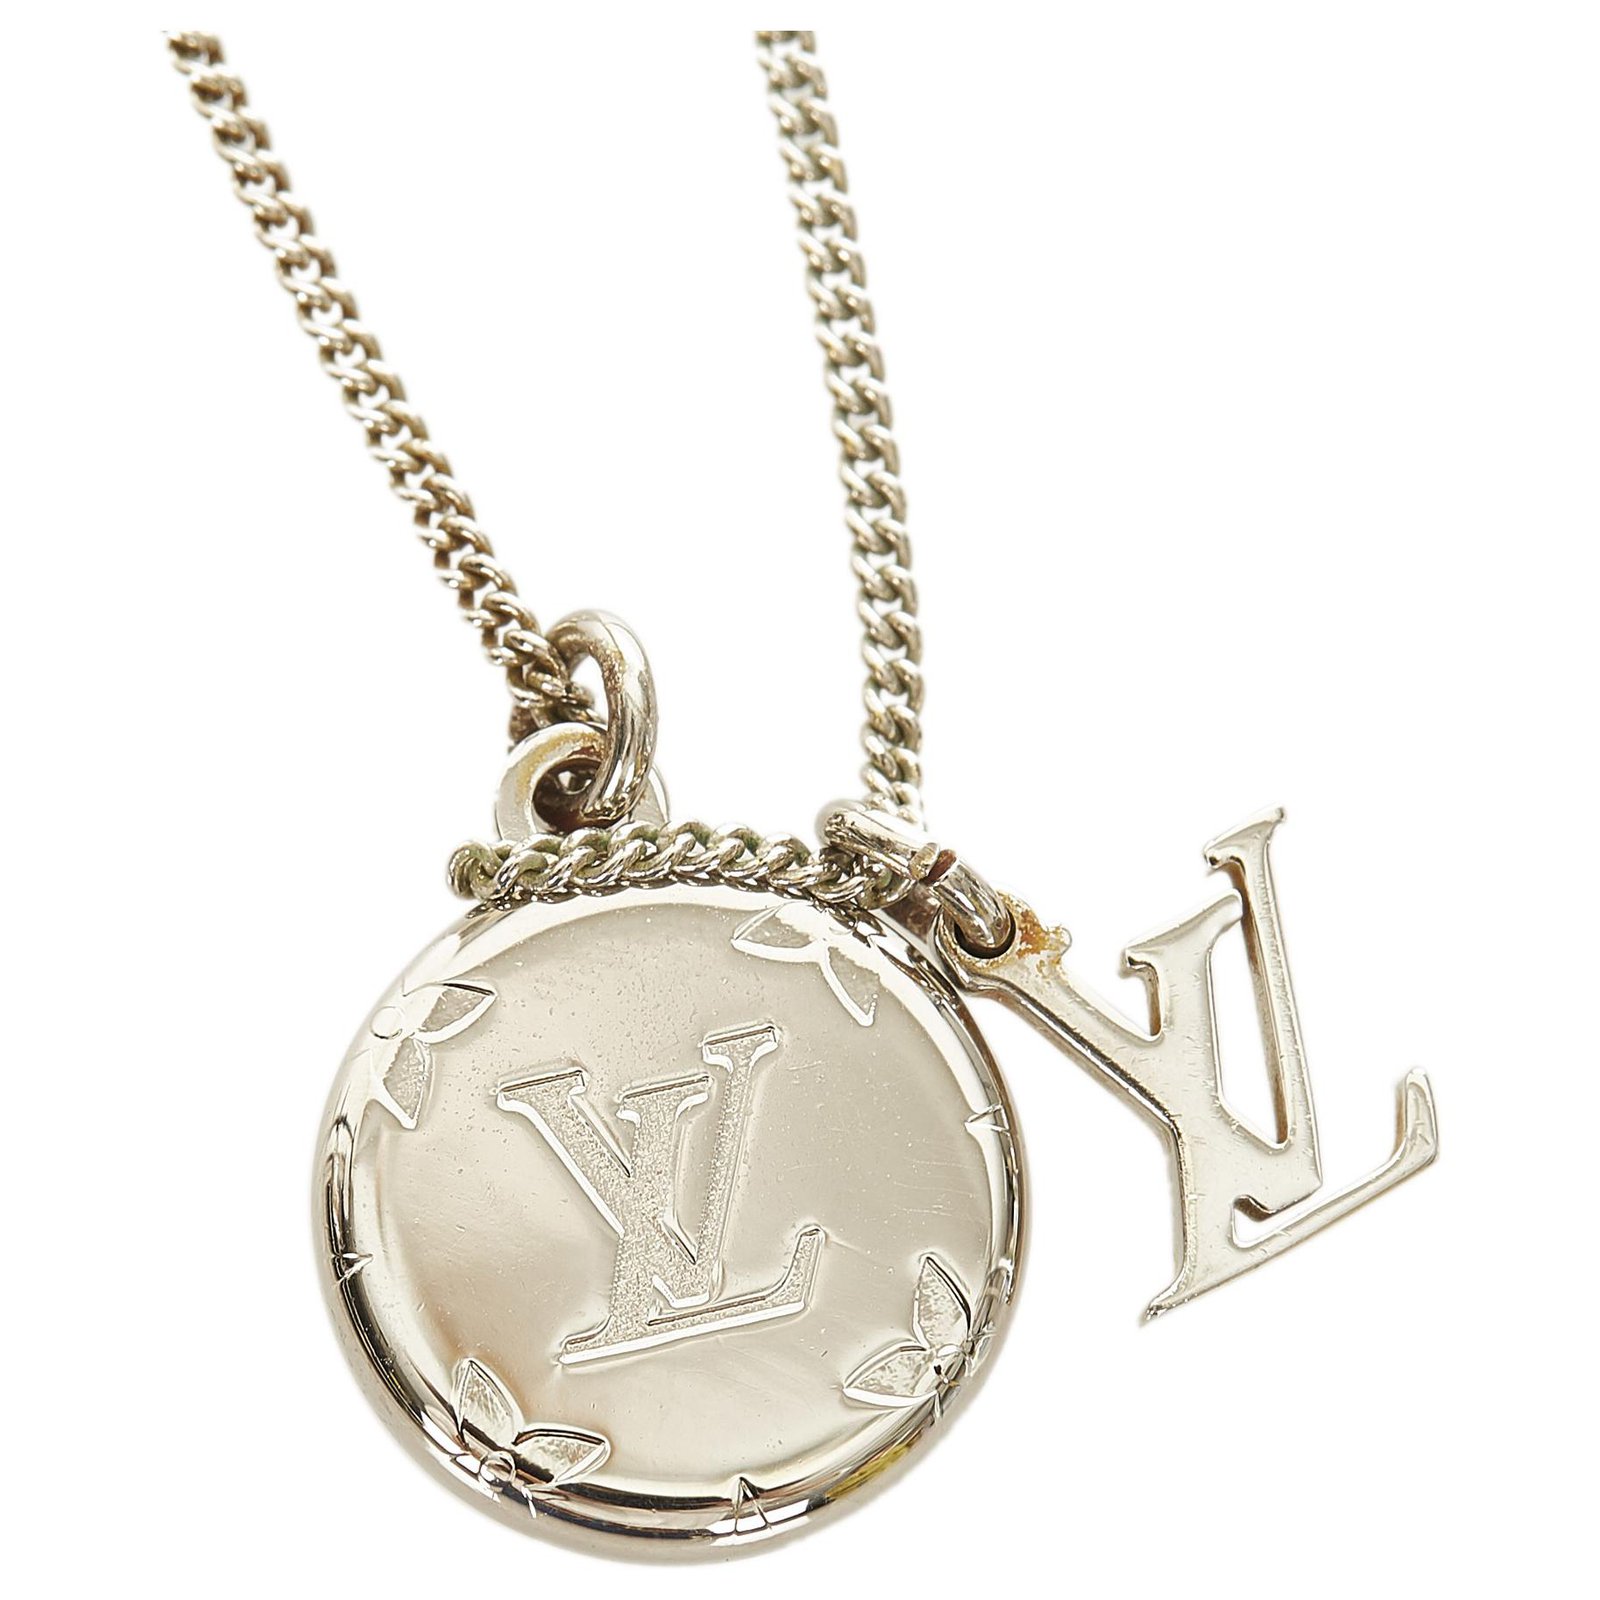 Jewellery Louis Vuitton Silver in Metal - 35090131